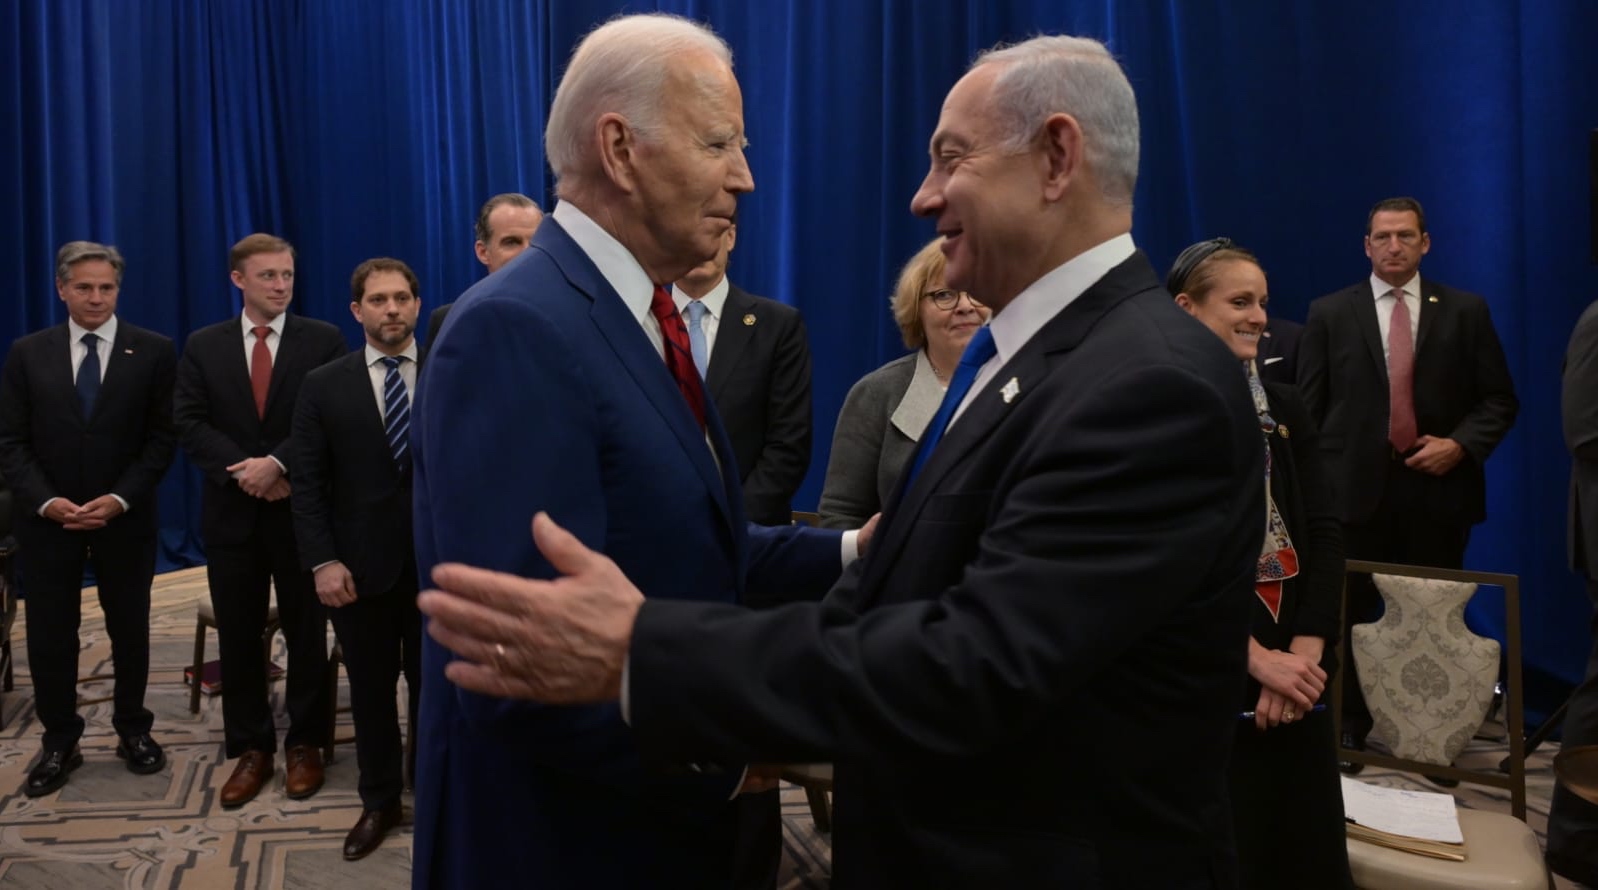 Biden and Netanyahu to speak as world leaders pledge support for Israel